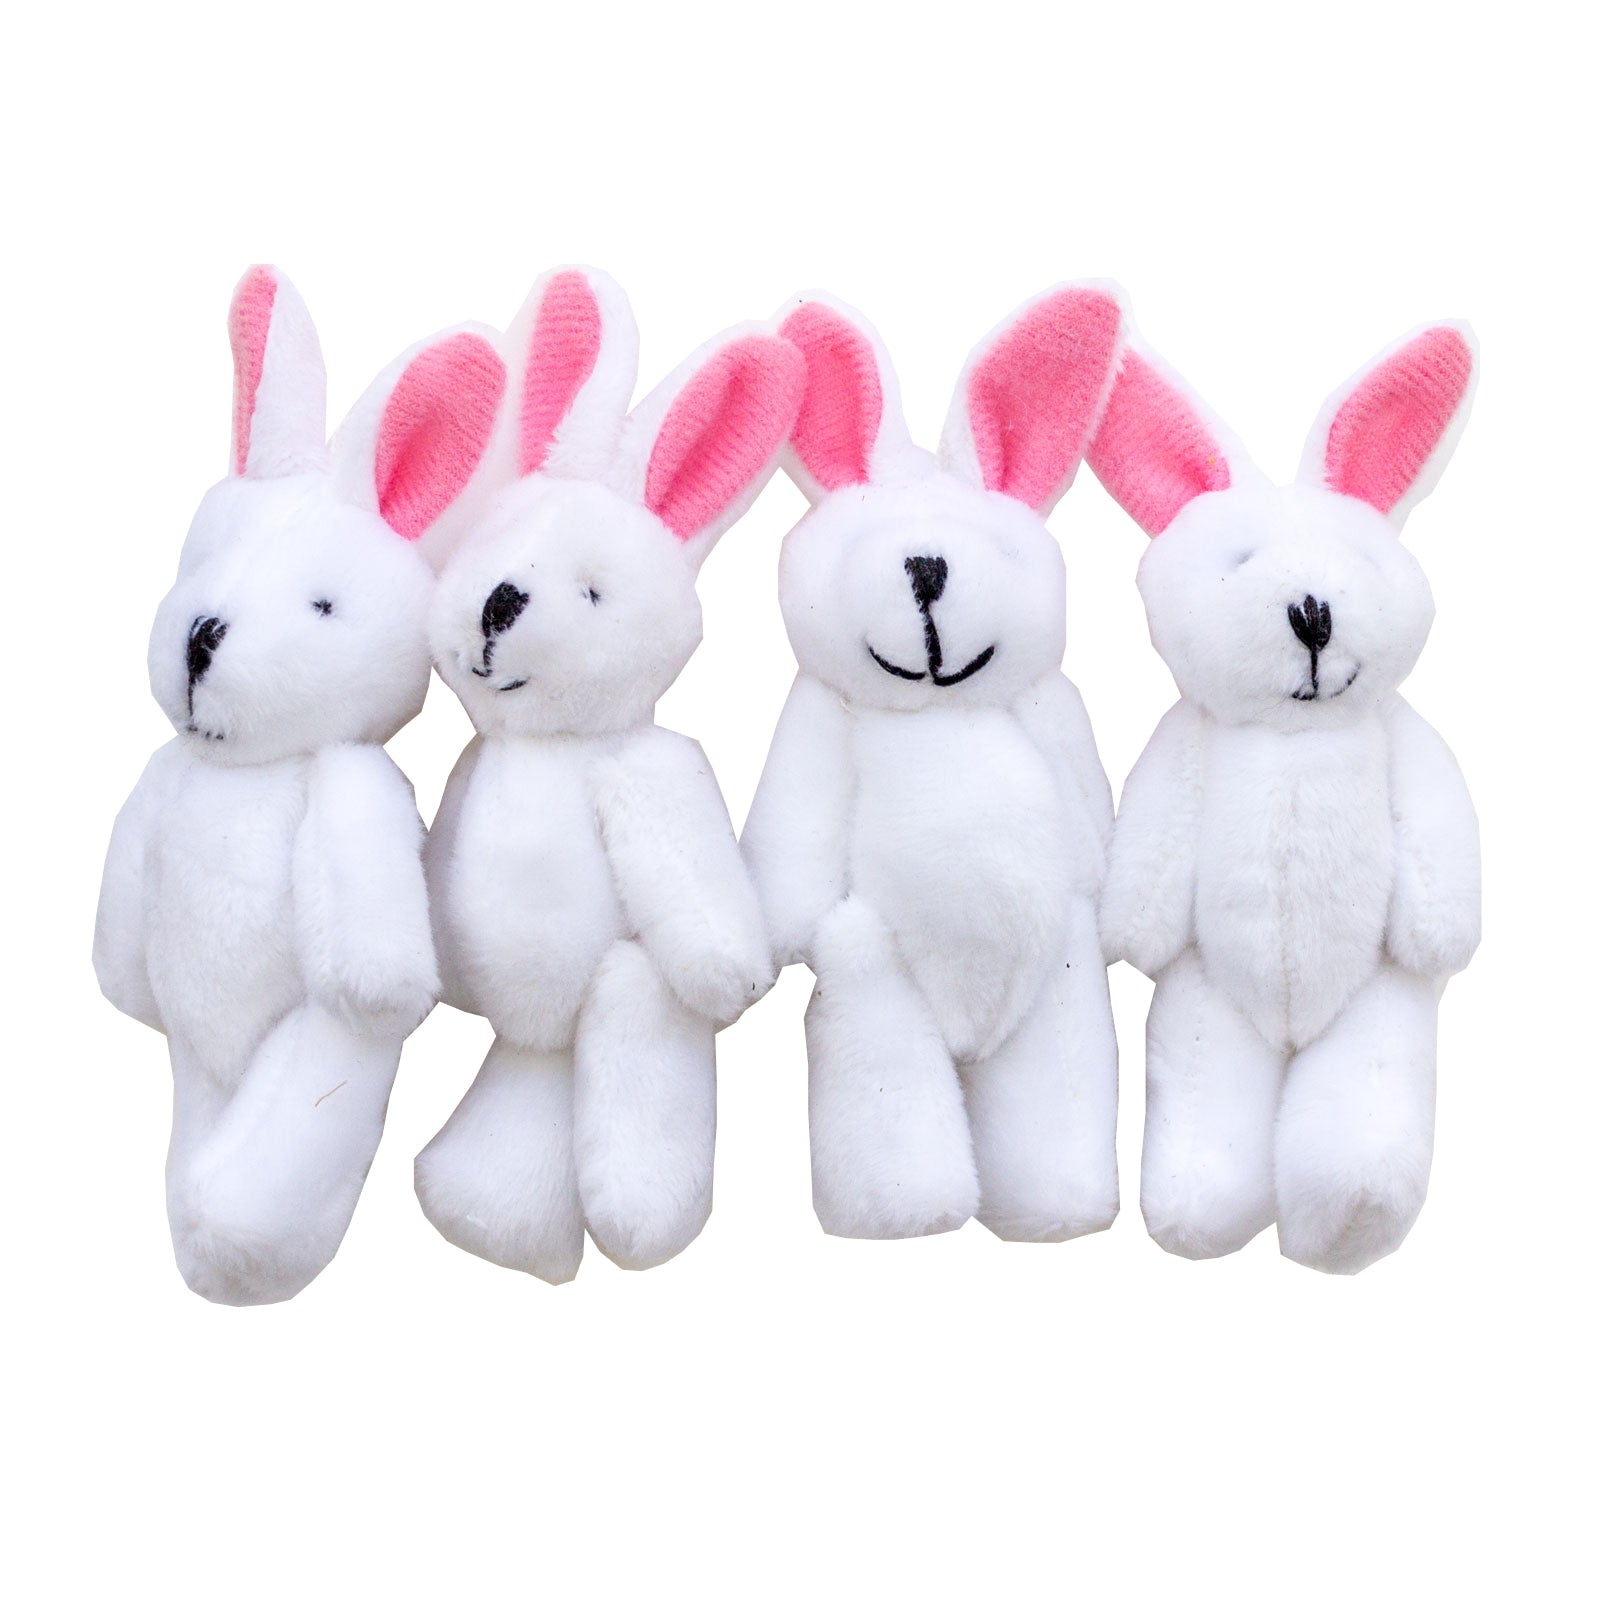 Small Rabbits X 60 - Cute Soft Adorable